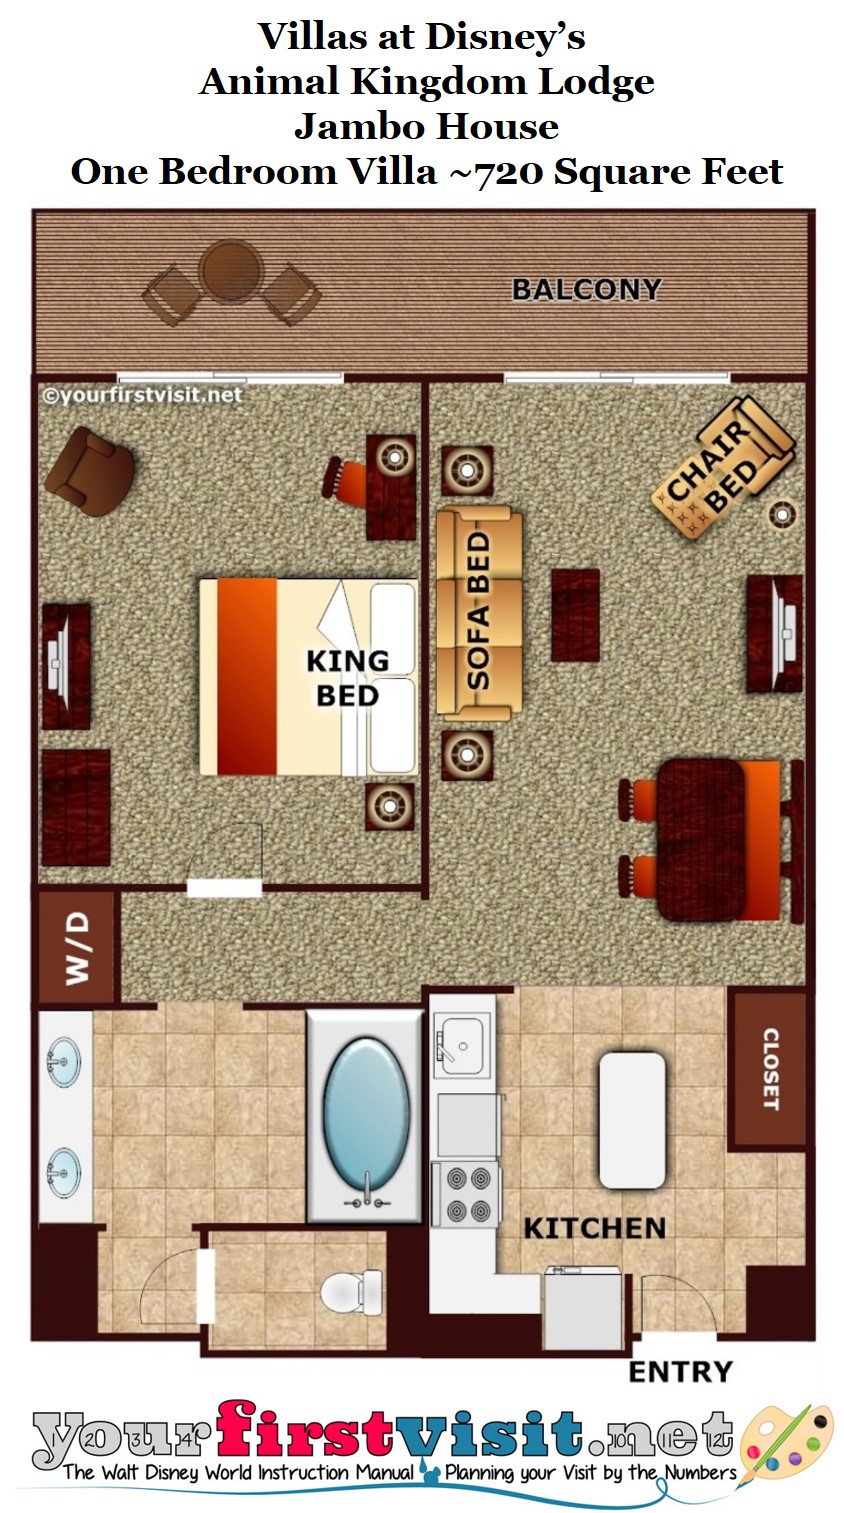 Floor Plan One Bedroom Villa Animal Kingdom Lodge Jambo House from yourfirstvisit.net